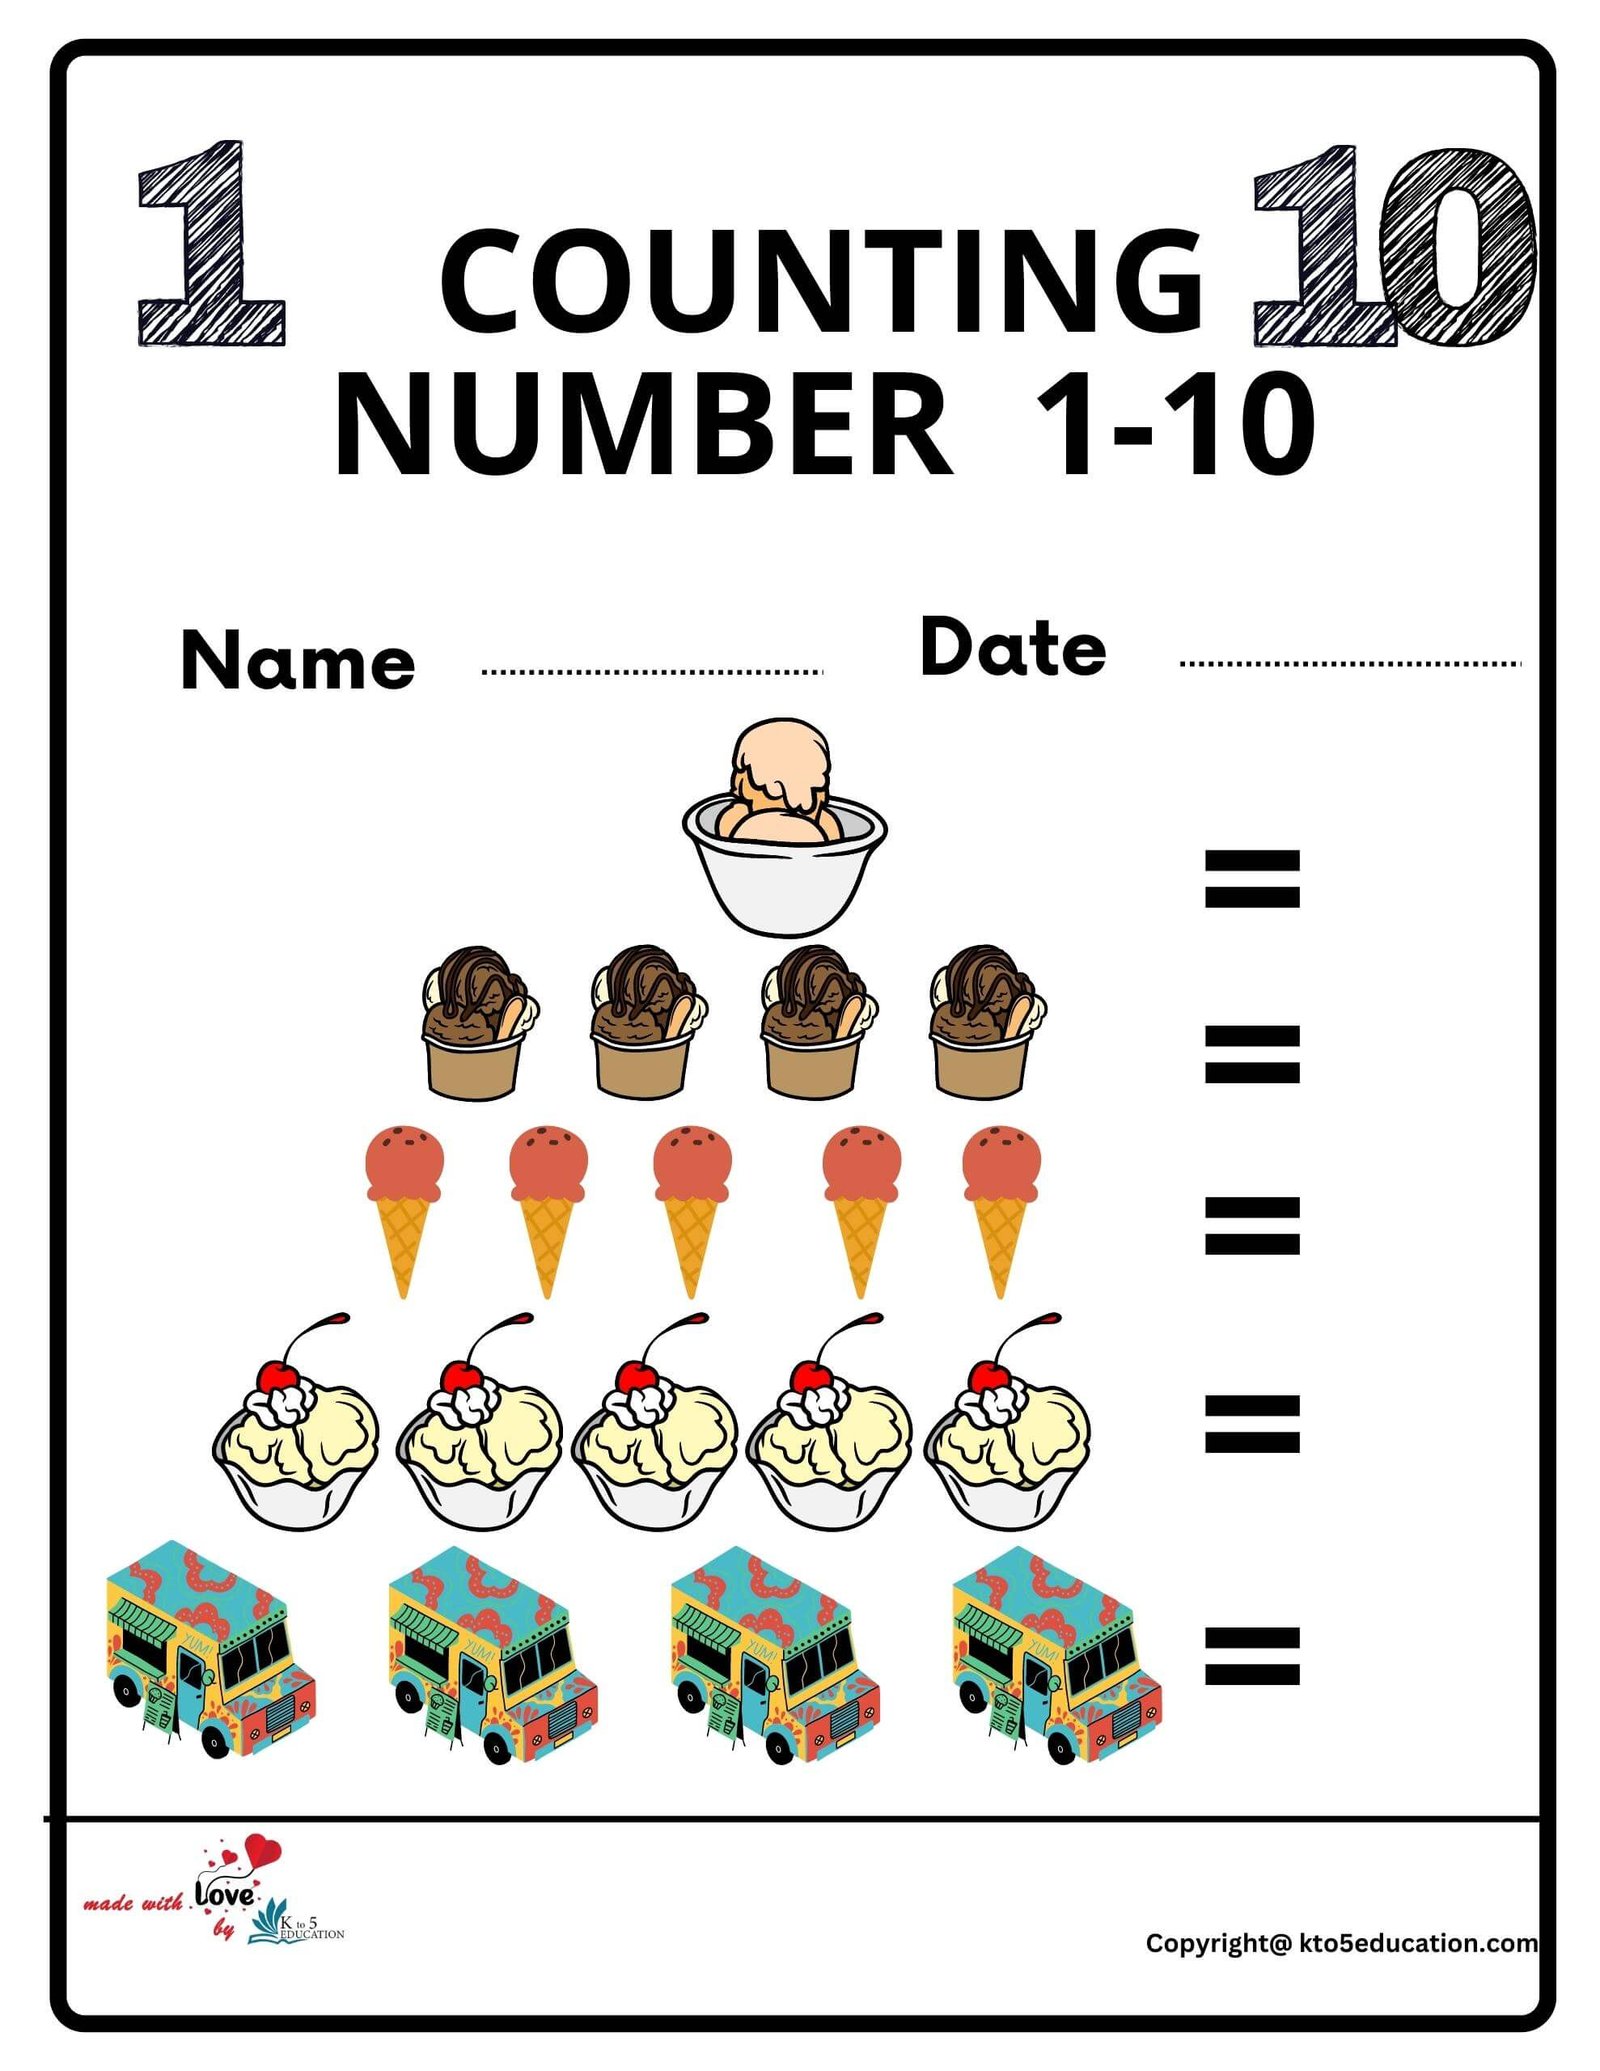 Counting Number 1-10 Worksheet